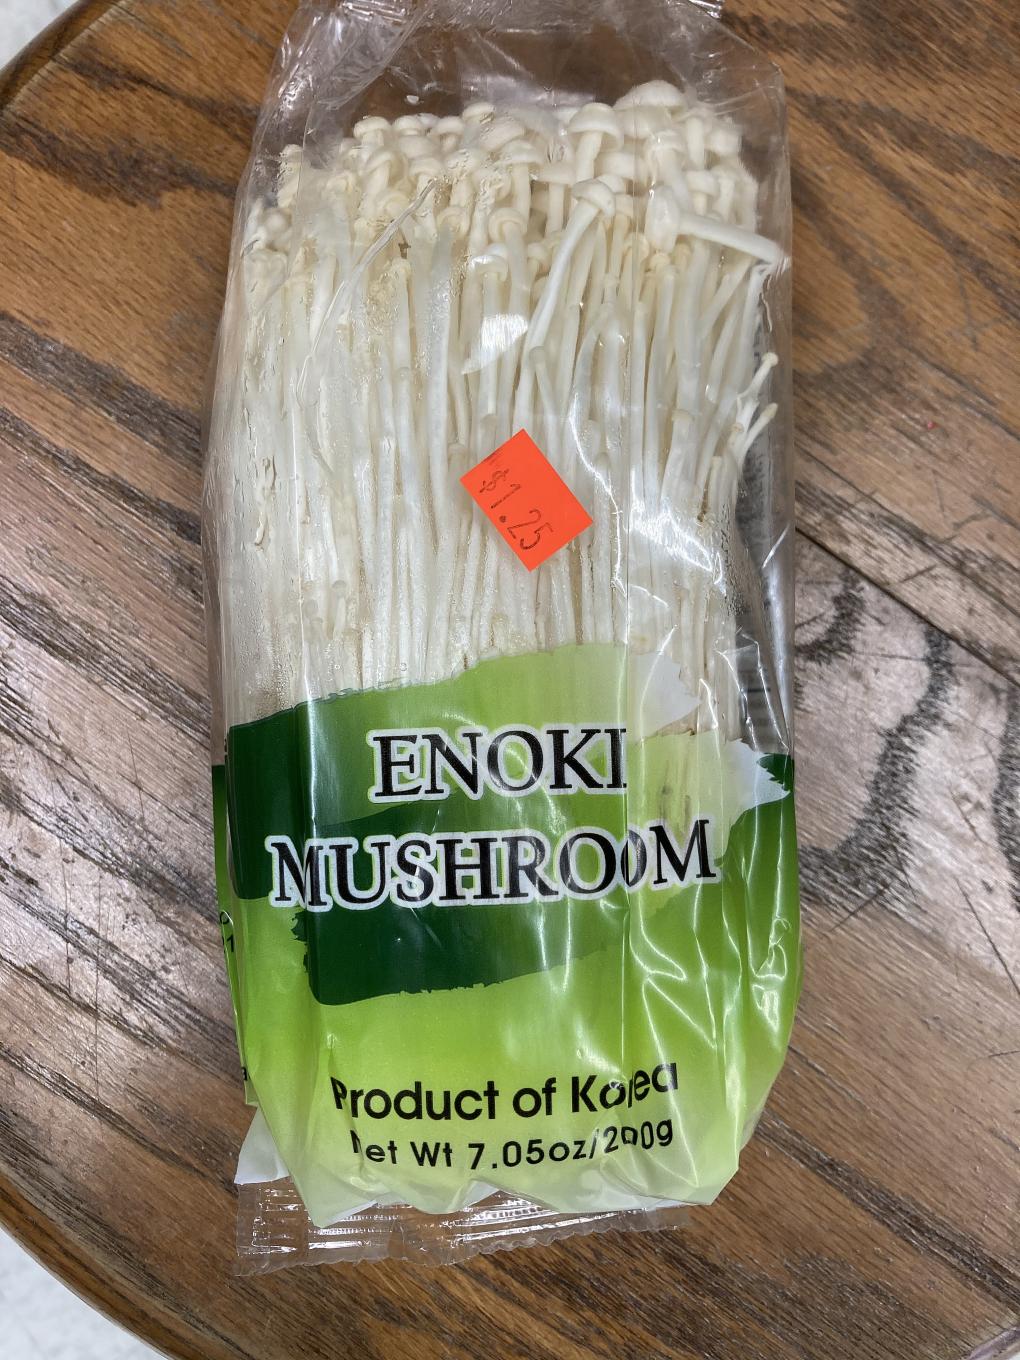 Golden Medal mushroom recalled Enoki mushrooms because of Listeria monocytogenes